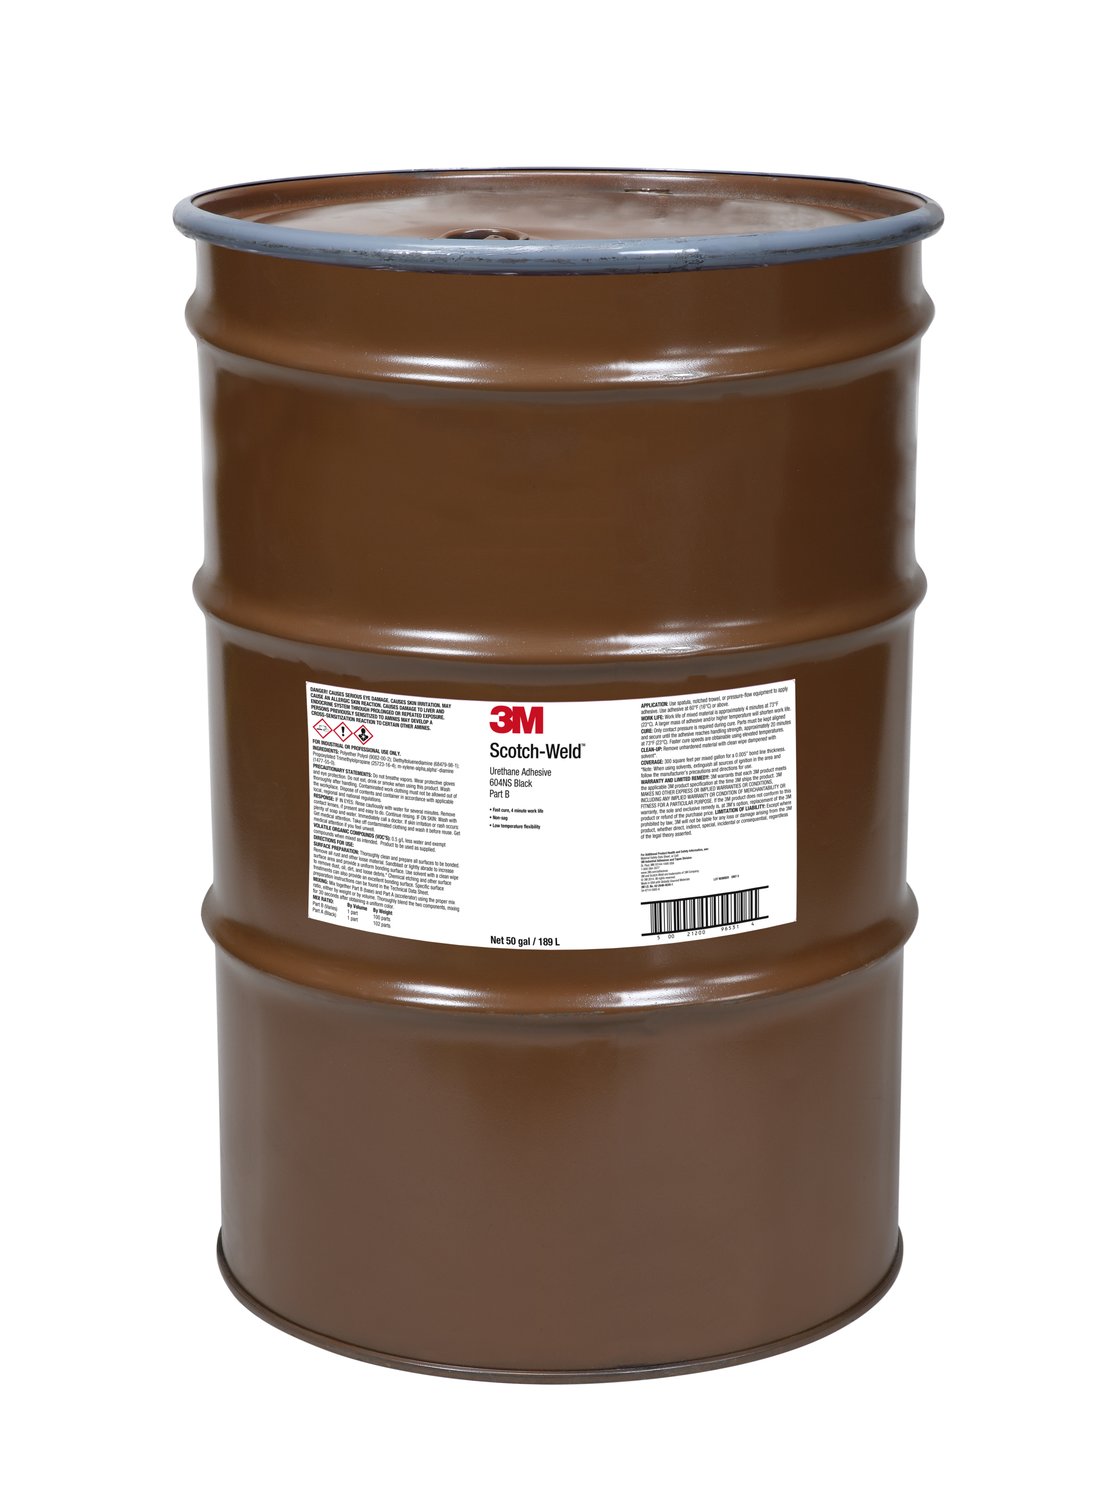 7010412243 - 3M Scotch-Weld Urethane Adhesive 604NS, Black, Part B, 55 Gallon (50
Gallon Net), Drum